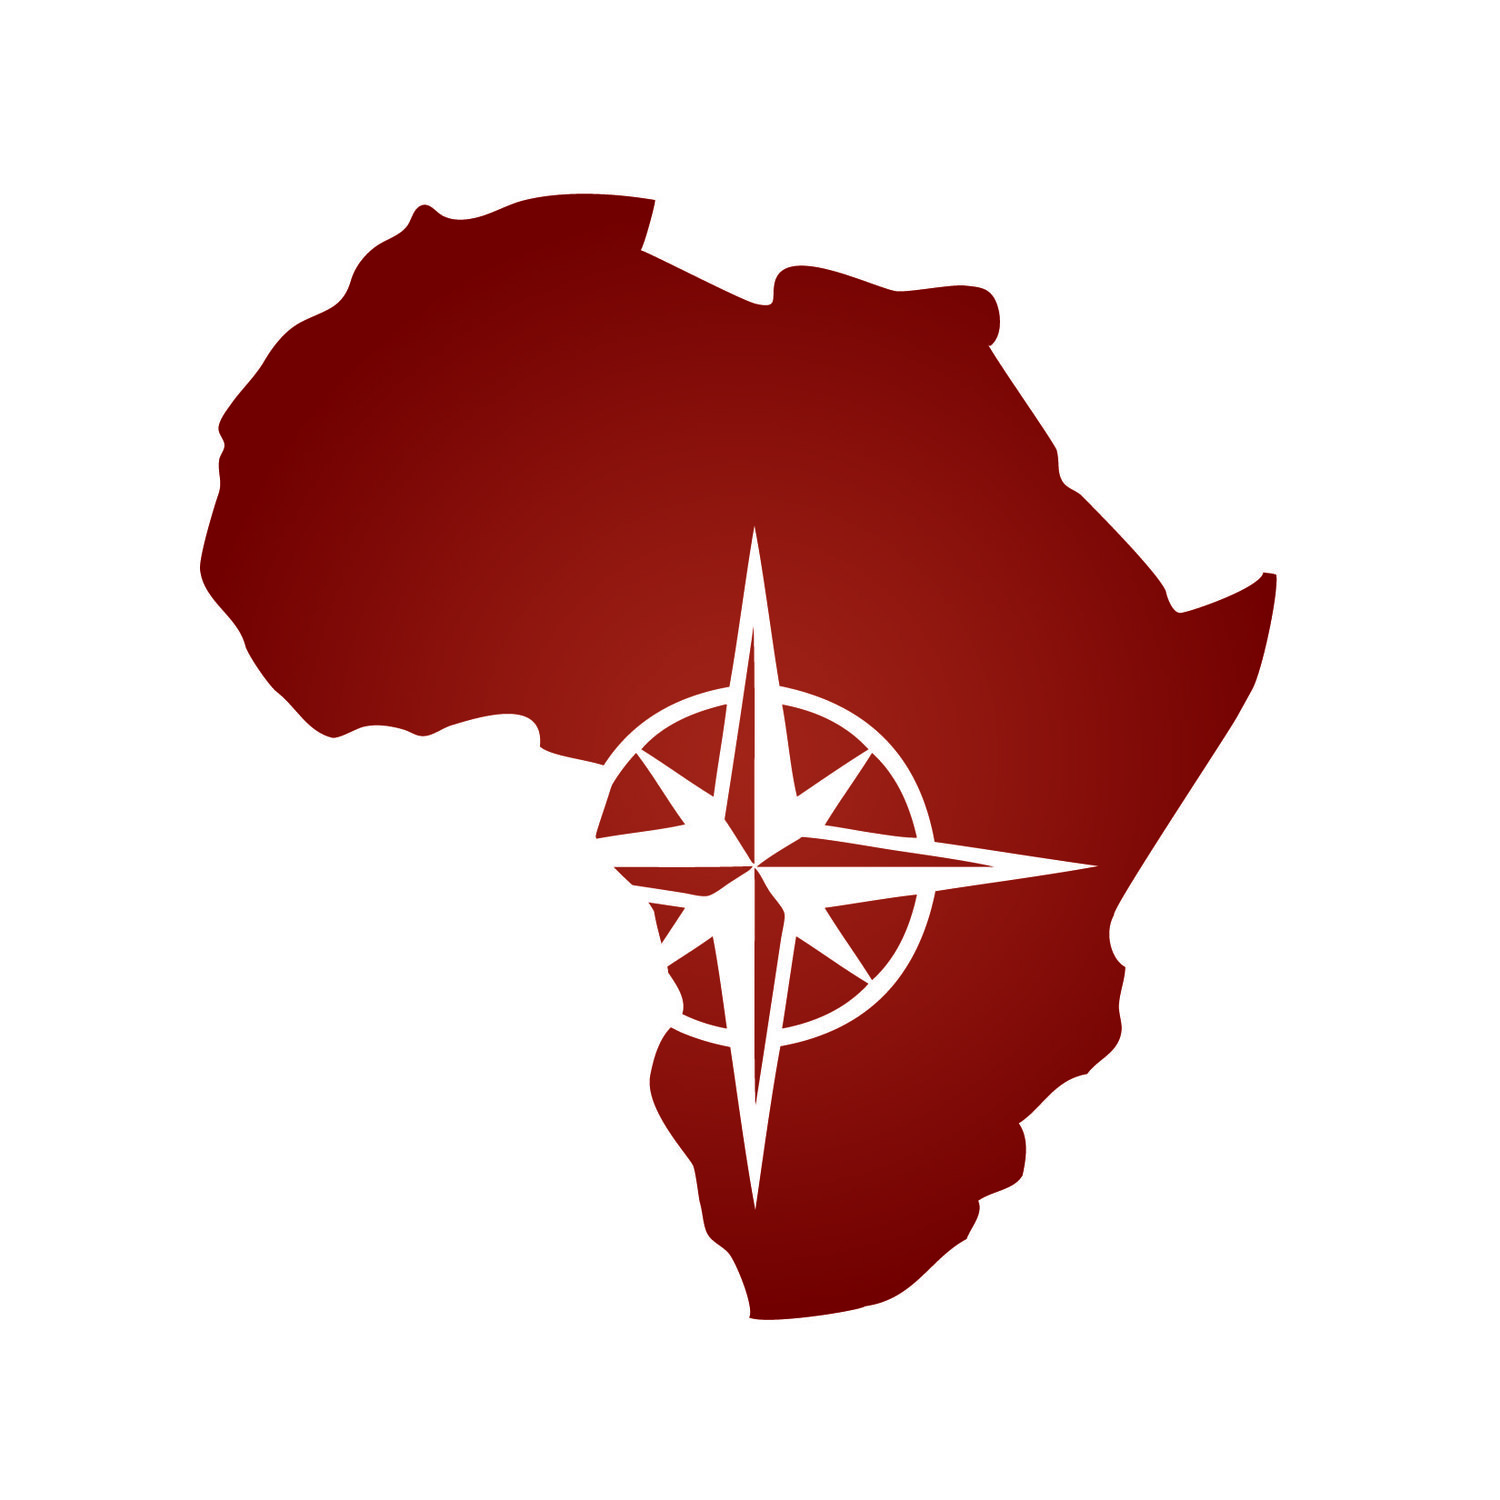 Africa clipart logo. African scholarship exchange 